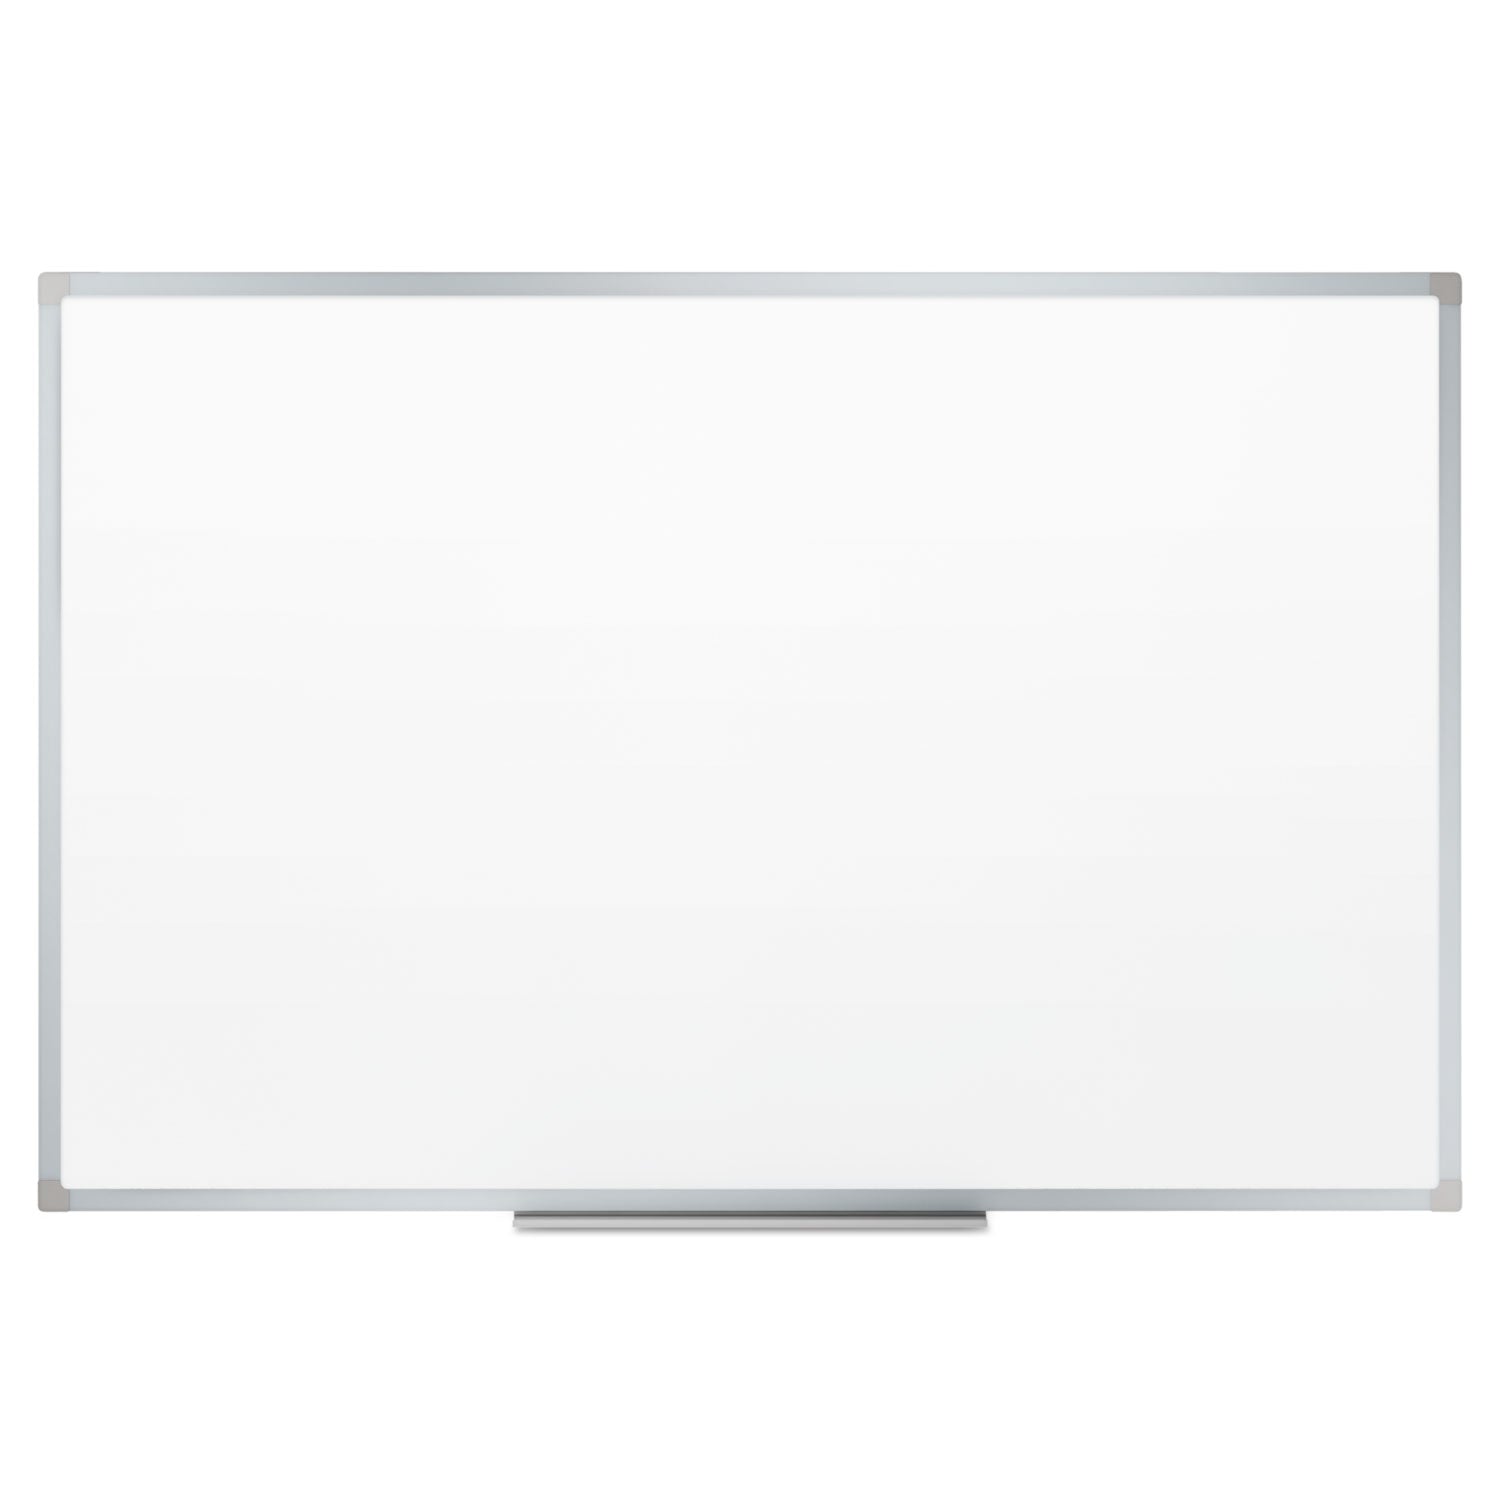 Dry Erase Board with Aluminum Frame, 72 x 48, Melamine White Surface, Silver Aluminum Frame - 